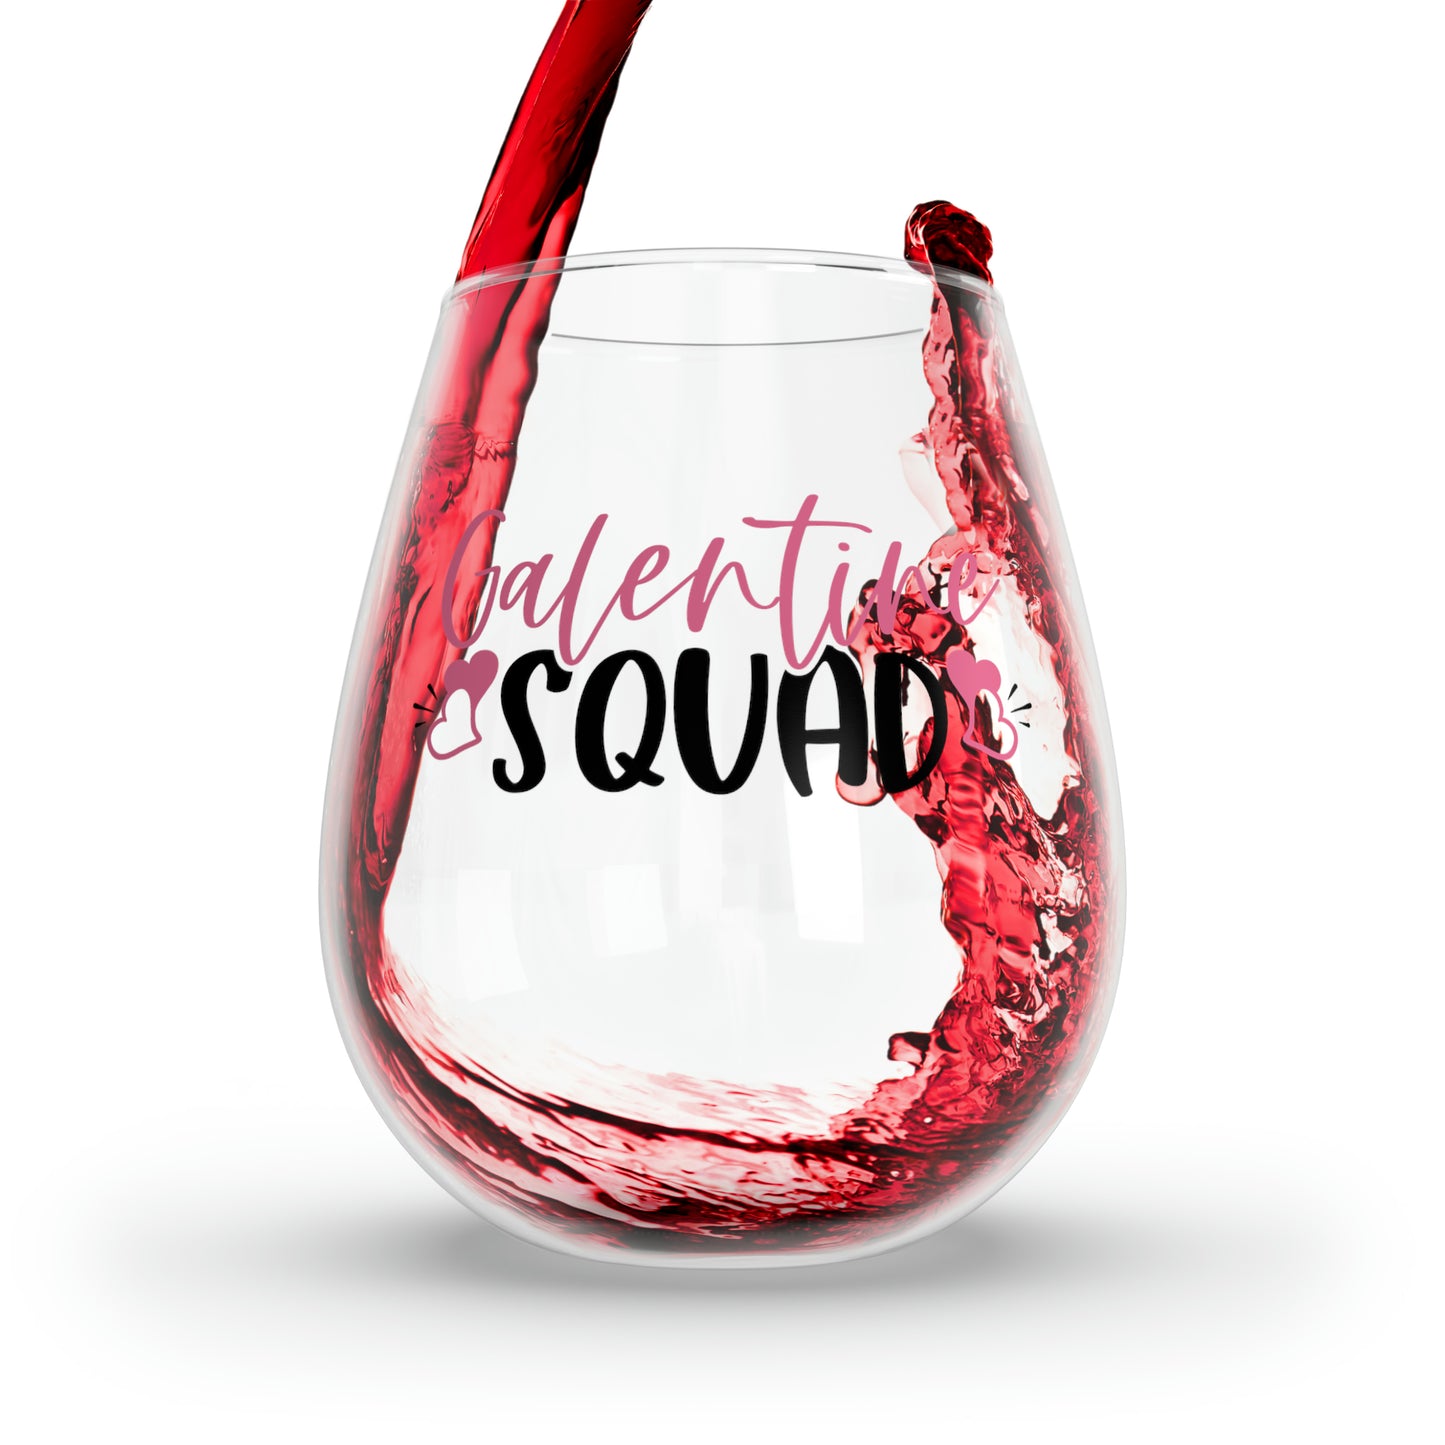 Galentine Squad Stemless Wine Glass, 11.75oz